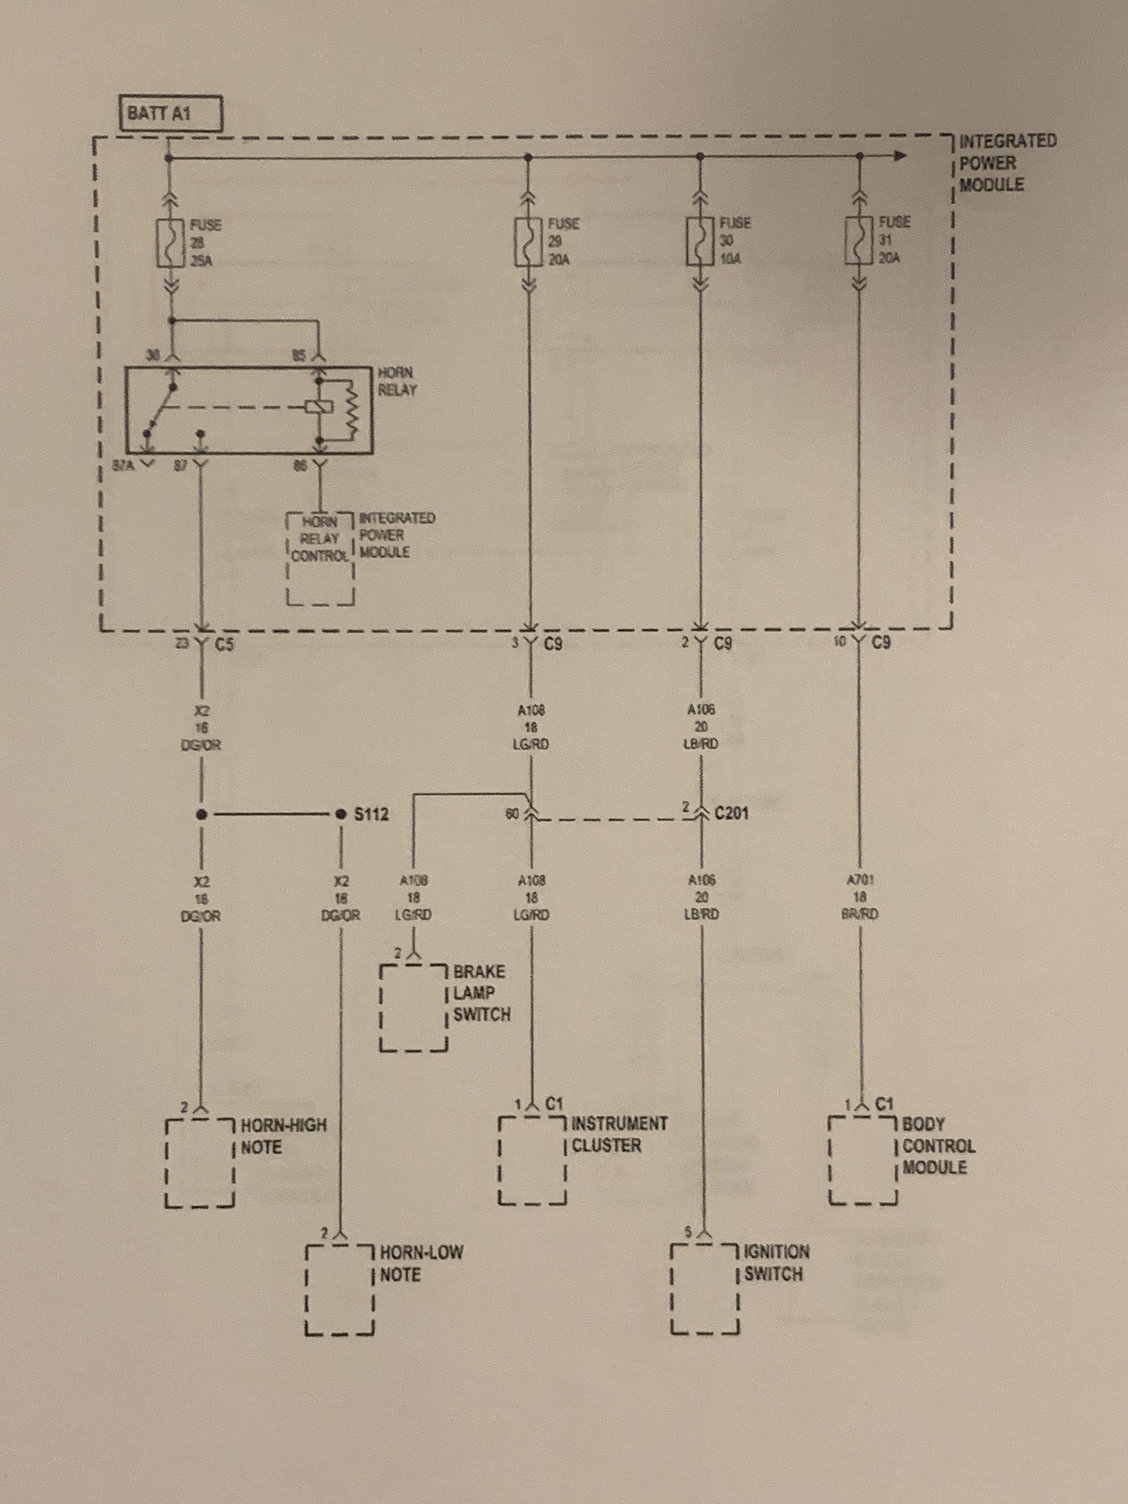 Pcm Wiring Diagram Chrysler Pacifica